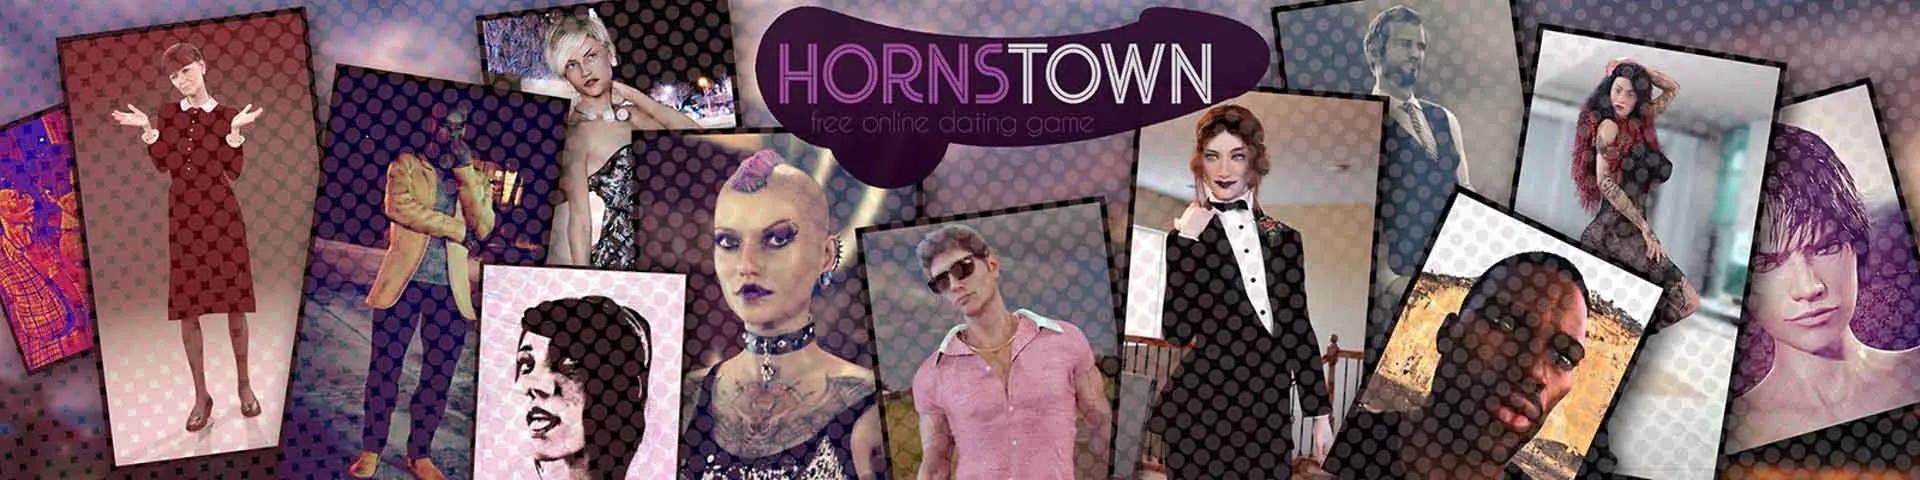 Hard Times in Hornstown 3d permainan seks, game porno, game dewasa